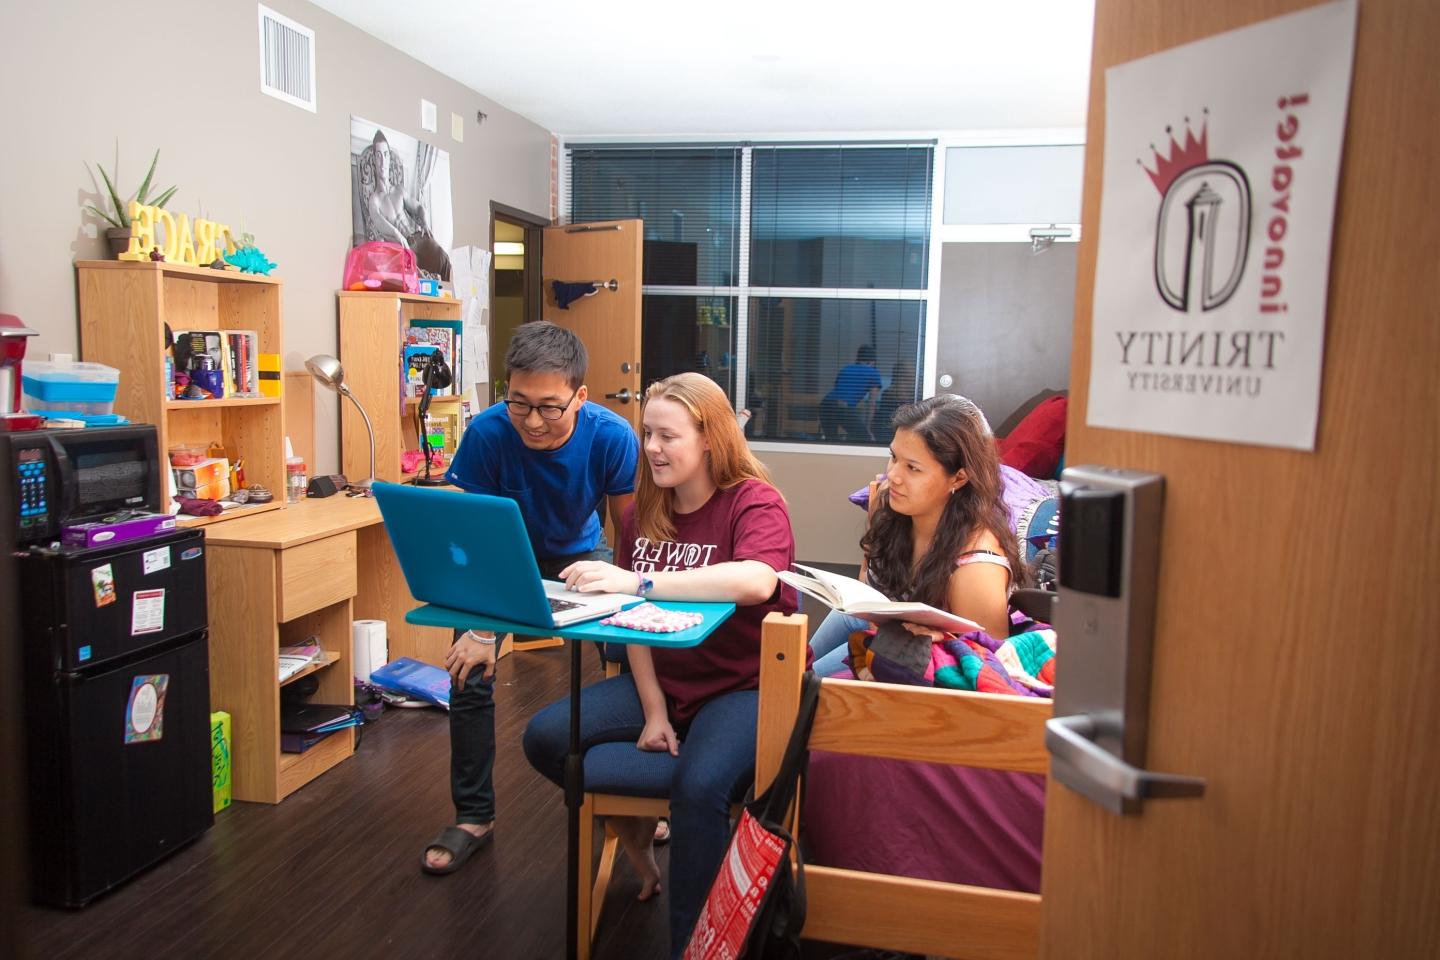 E-Hall students collaborate at desk in dorm room